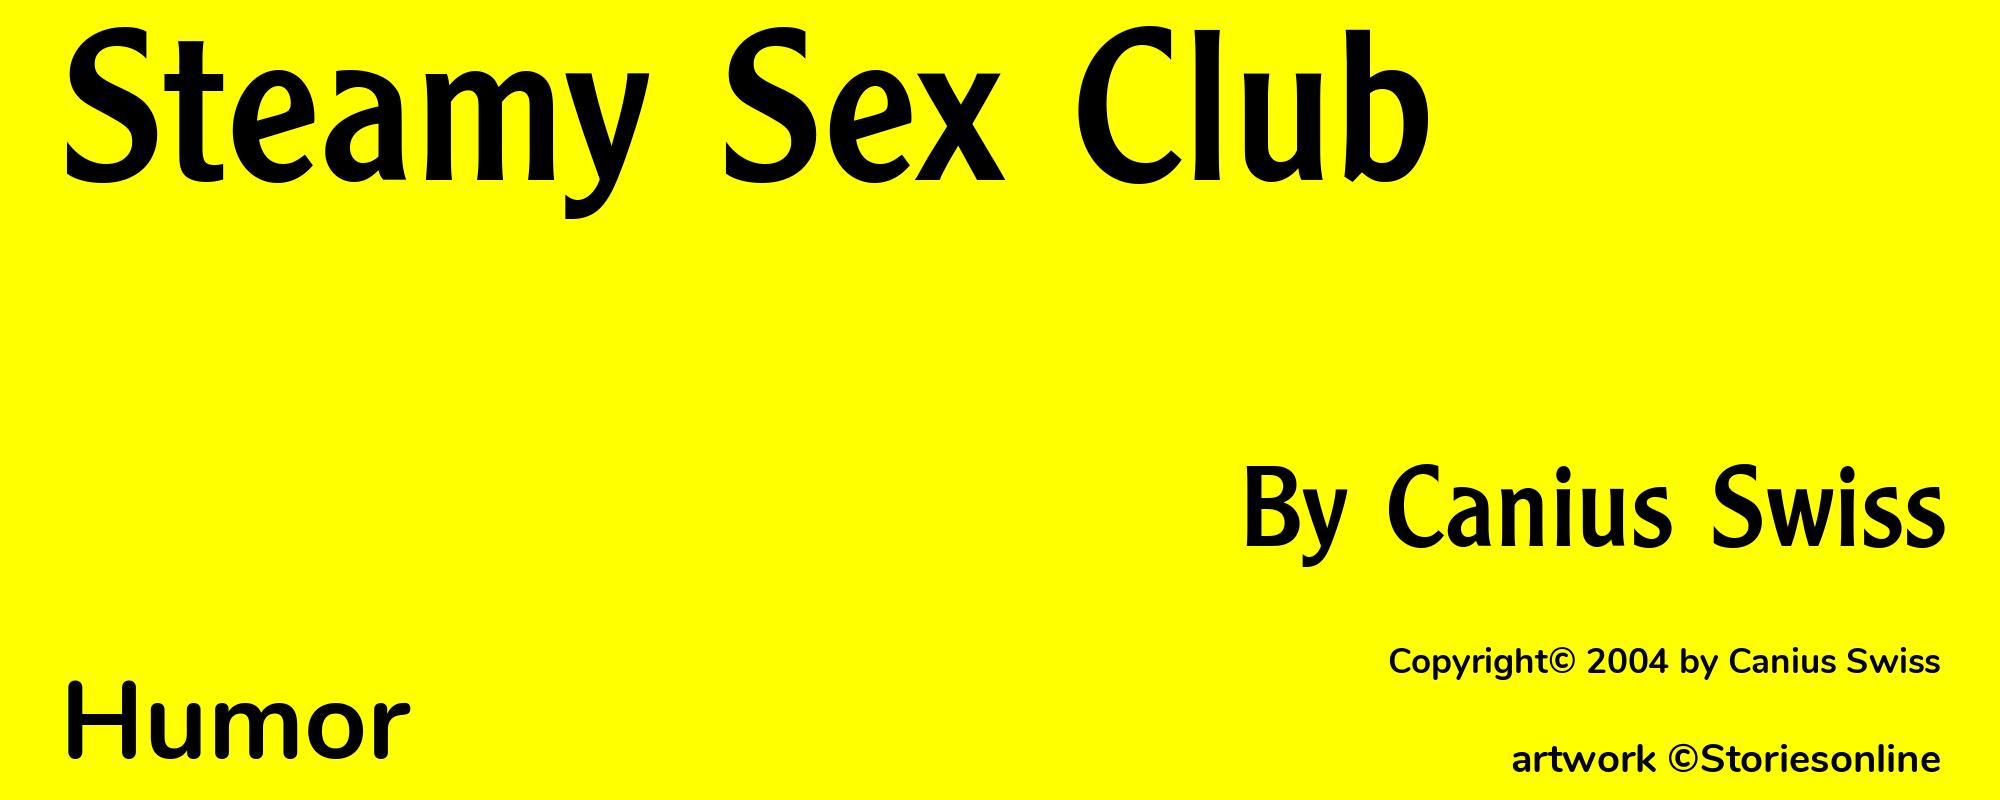 Steamy Sex Club - Cover